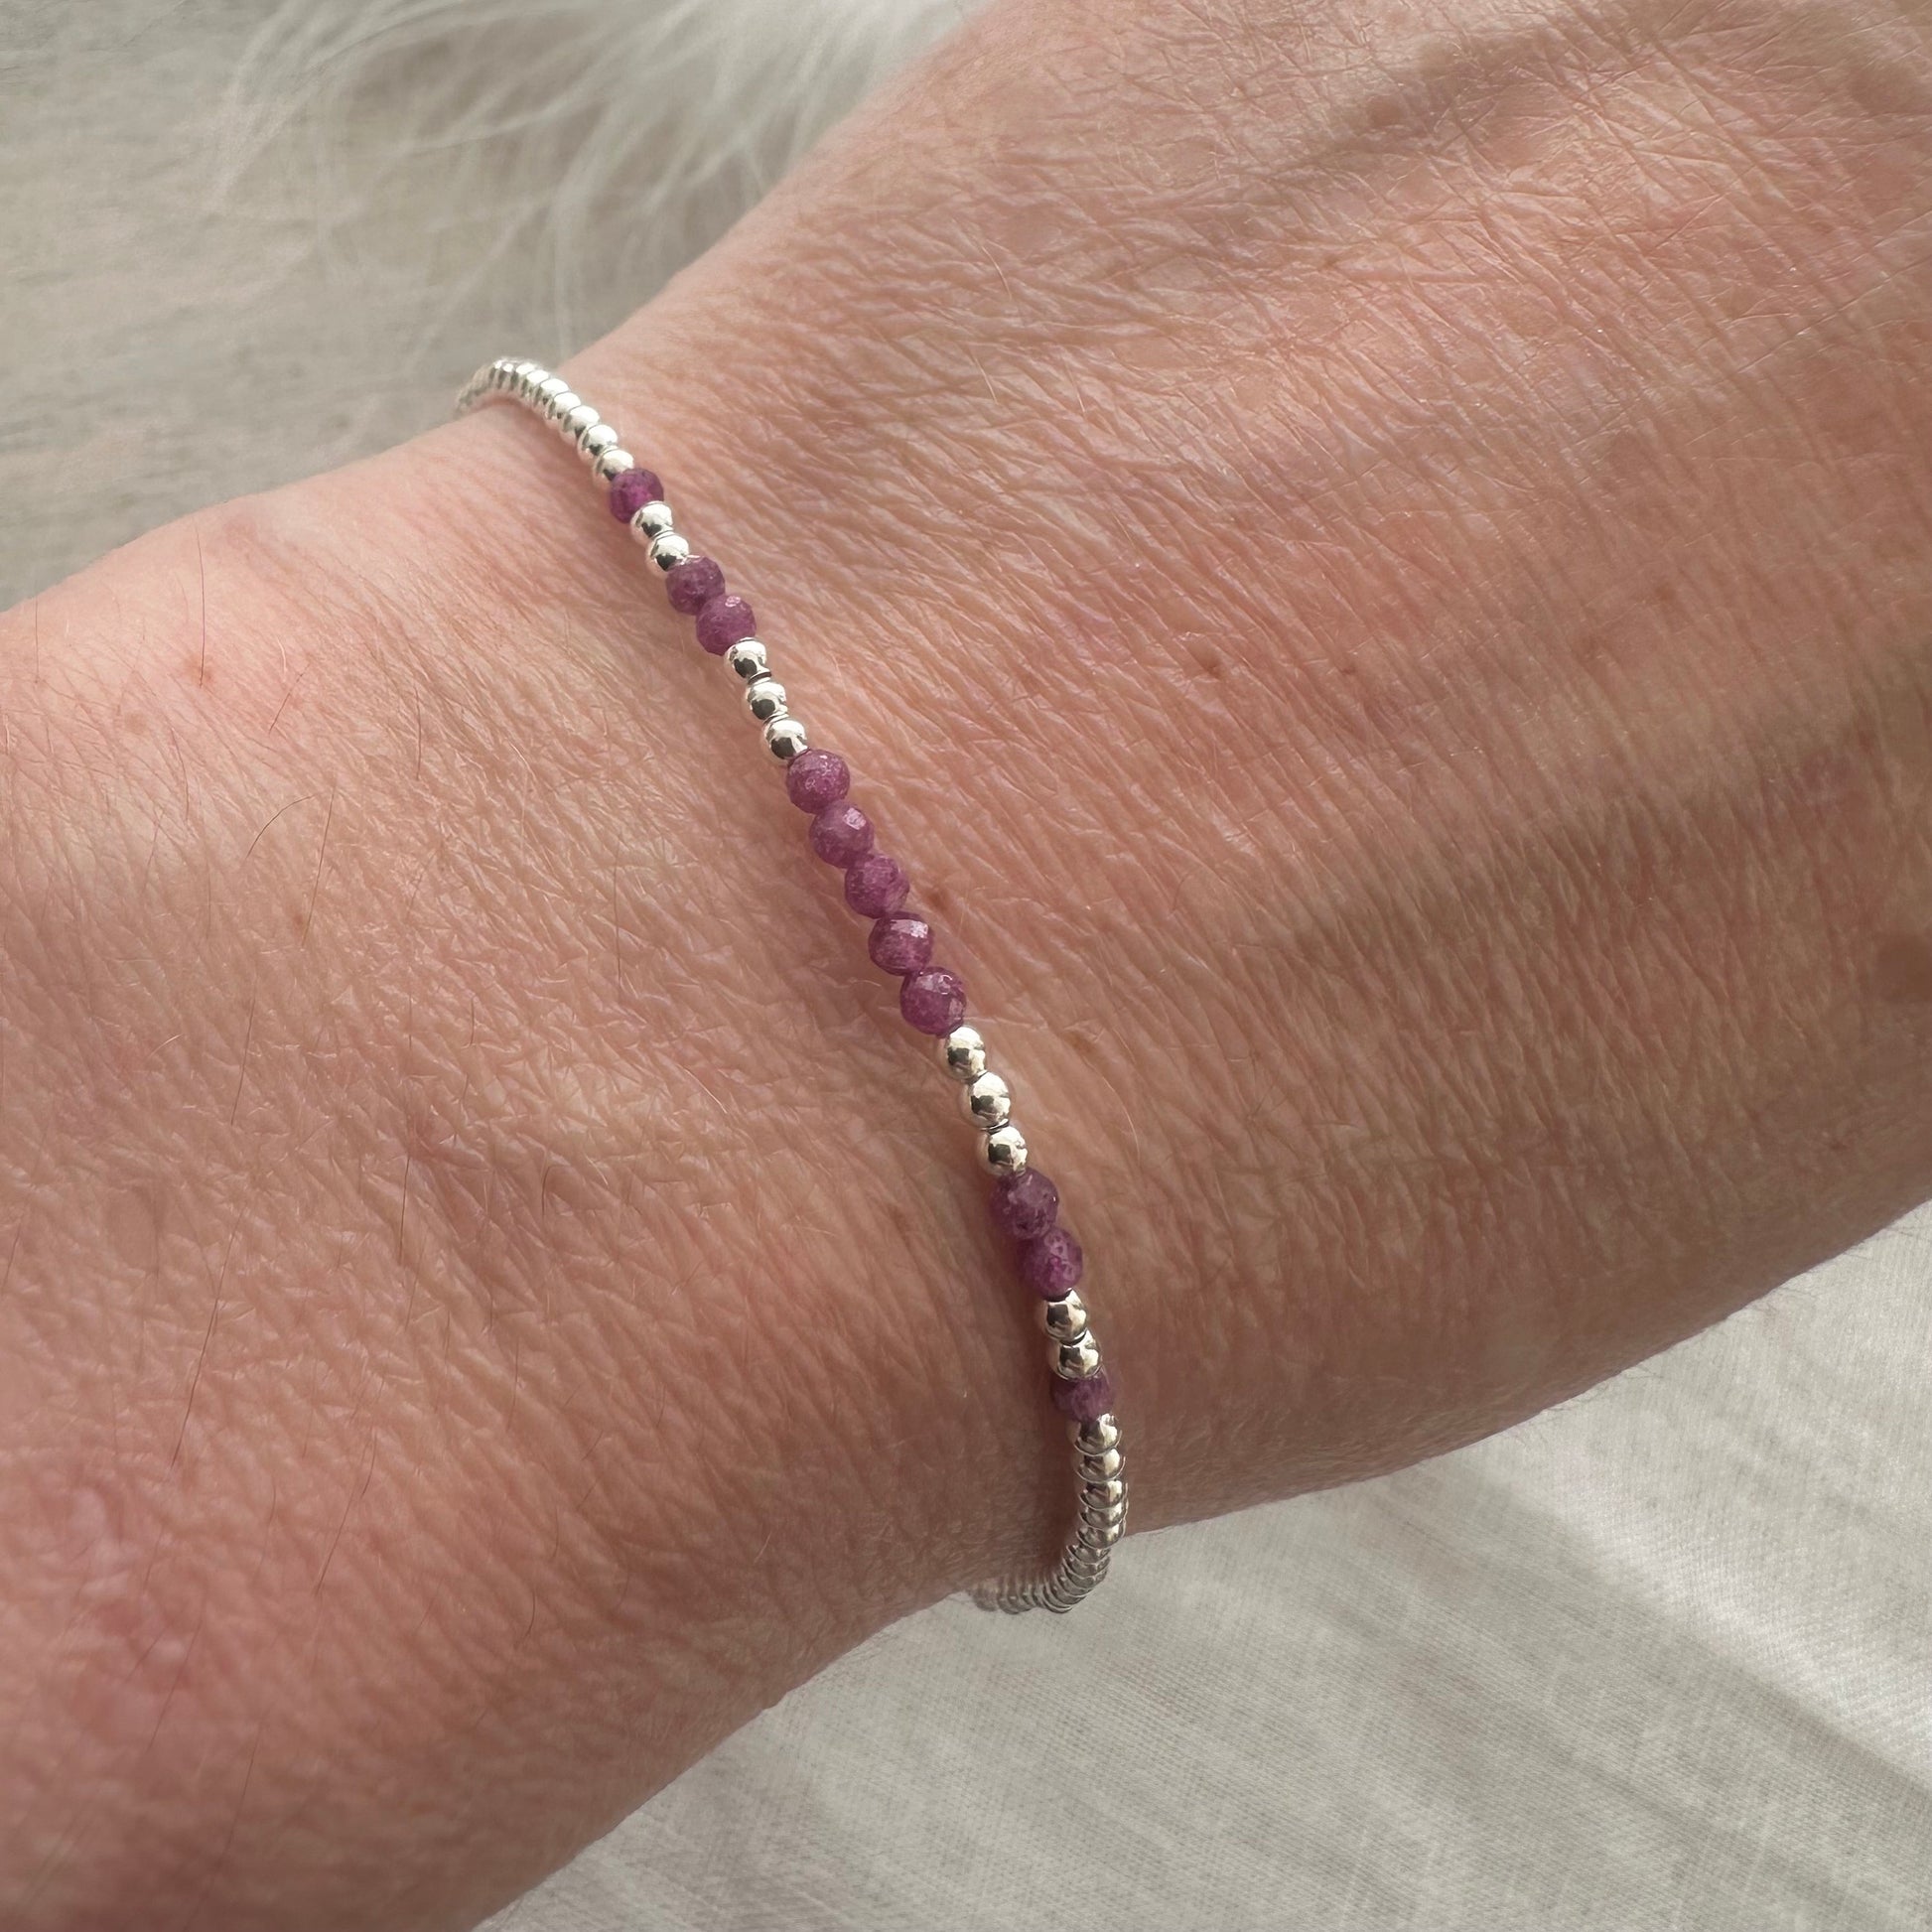 July Birthstone Ruby Bracelet, dainty stacking bracelet in sterling silver